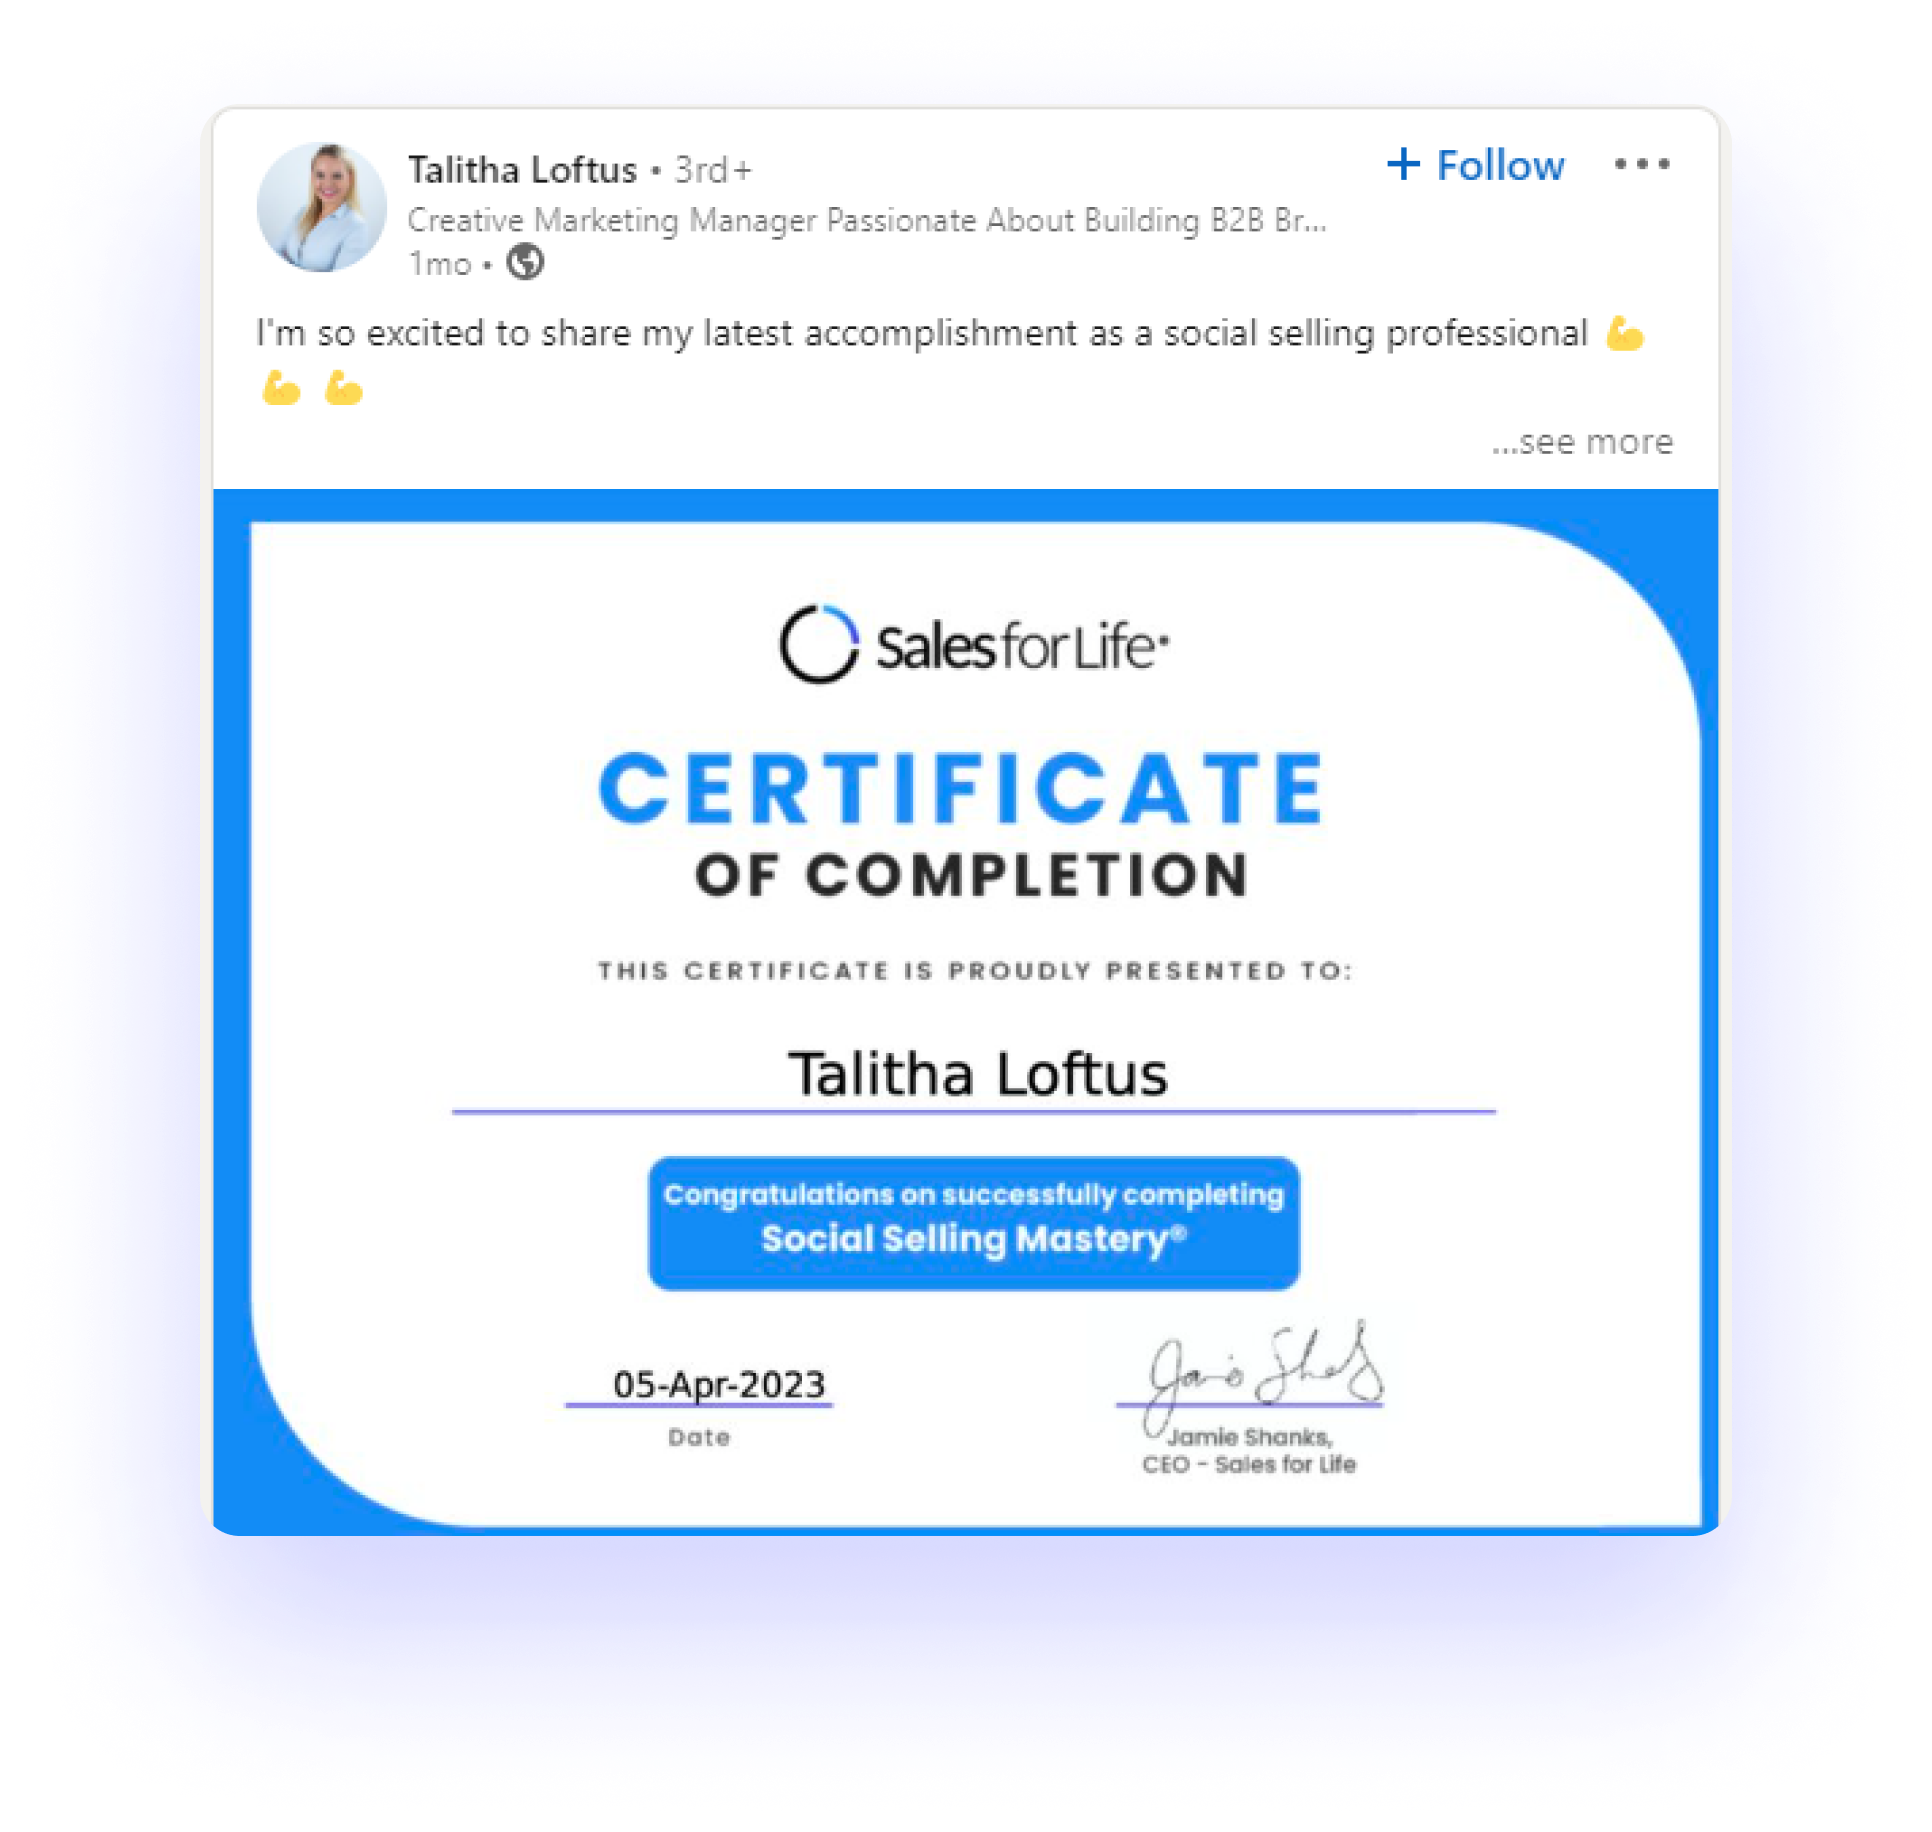 Talitha Loftus certificate